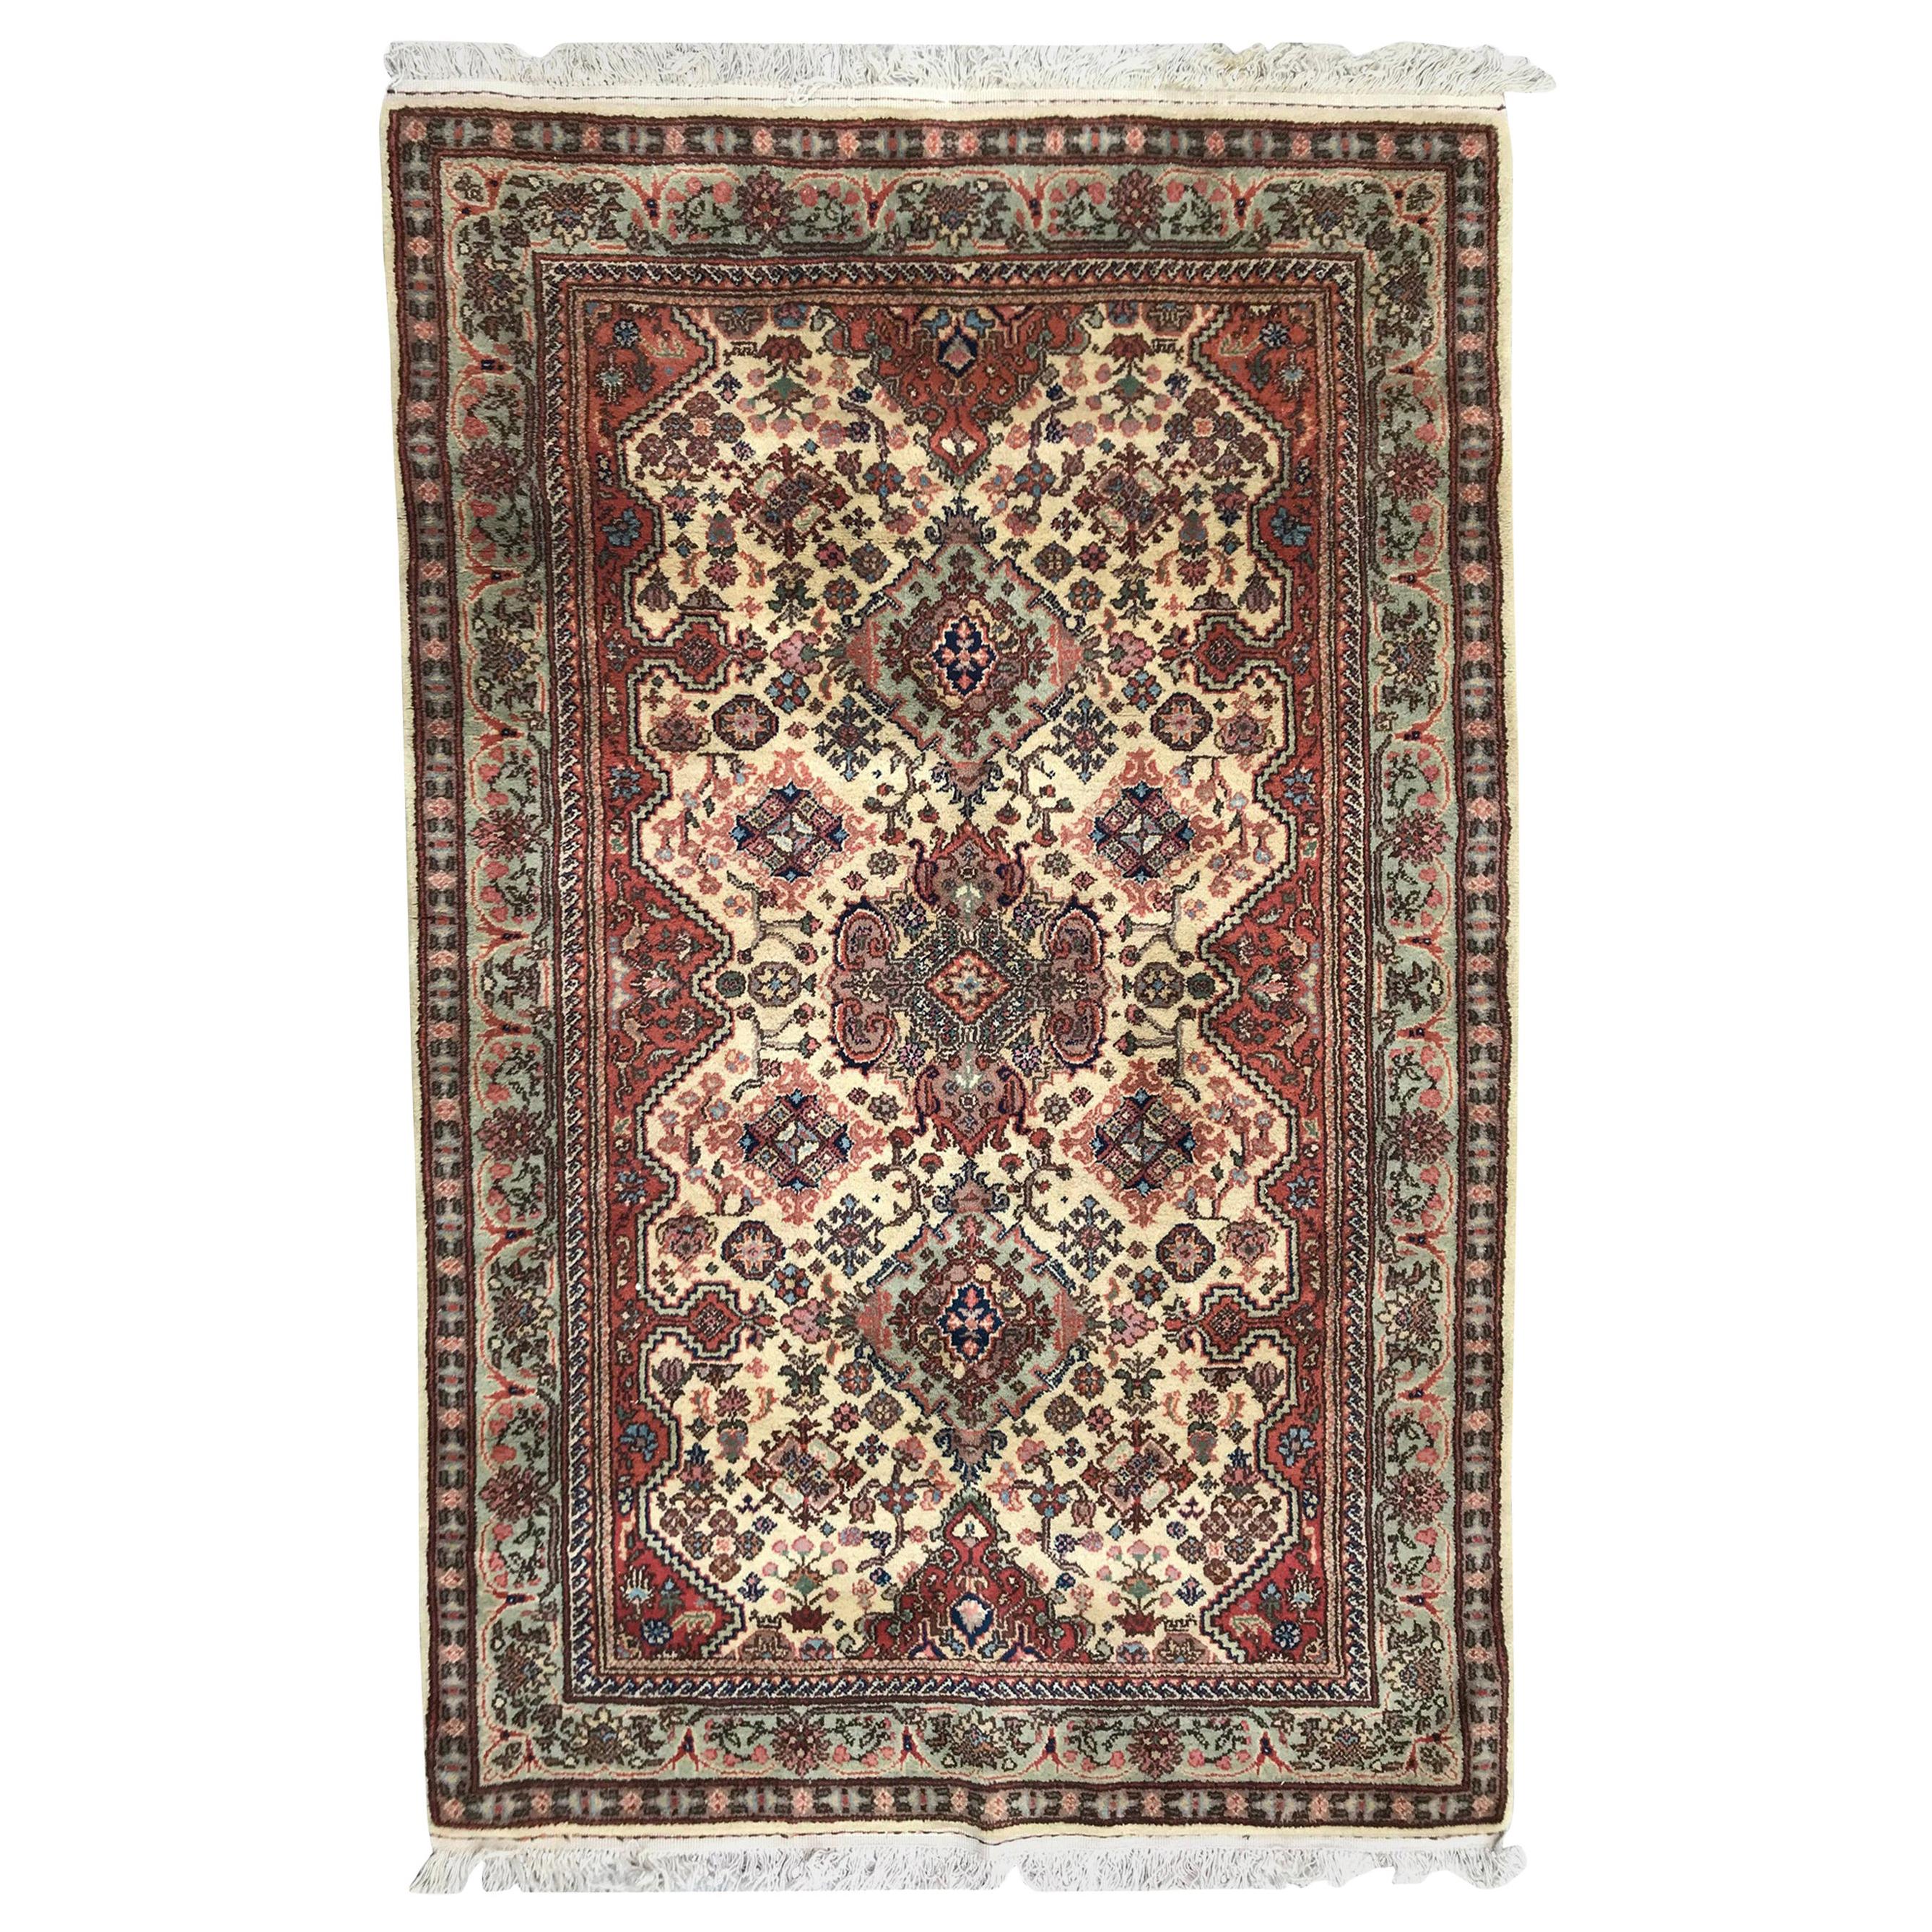 Bobyrug's Vintage Transylvanian Persian Design-Teppich